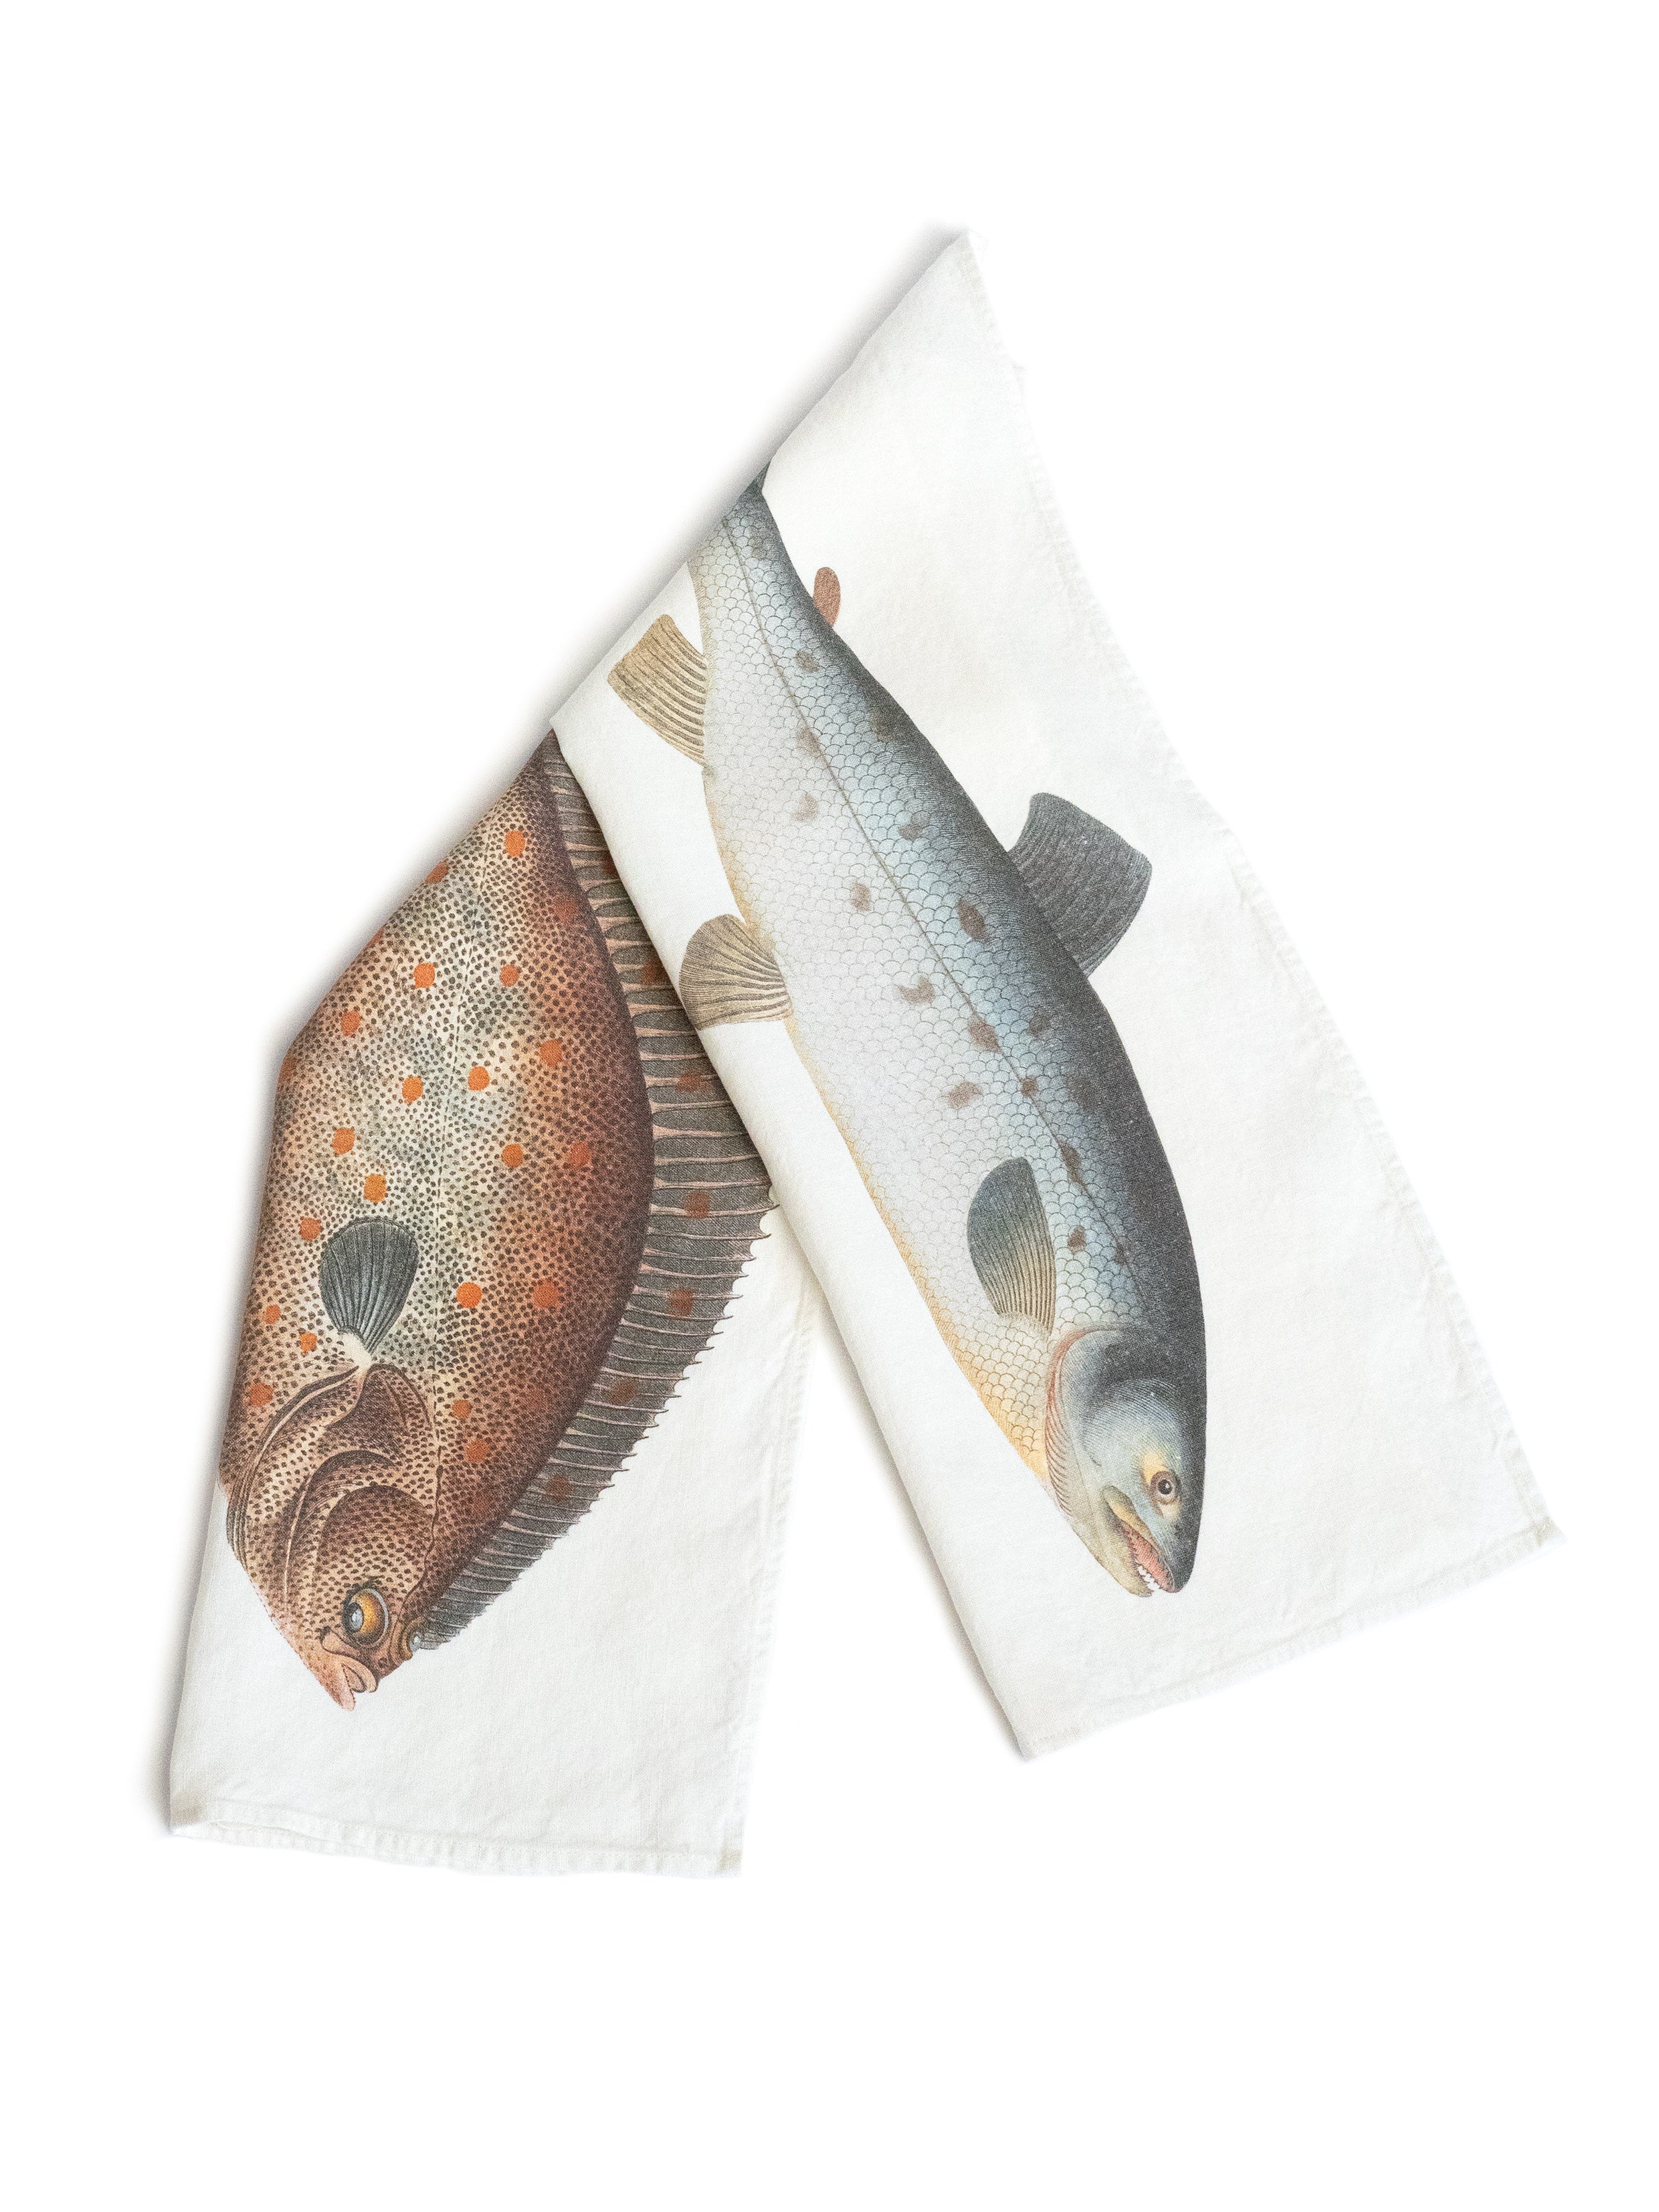 The Linoroom “Salmon & Turbot,” Pair of linen printed tea towels.